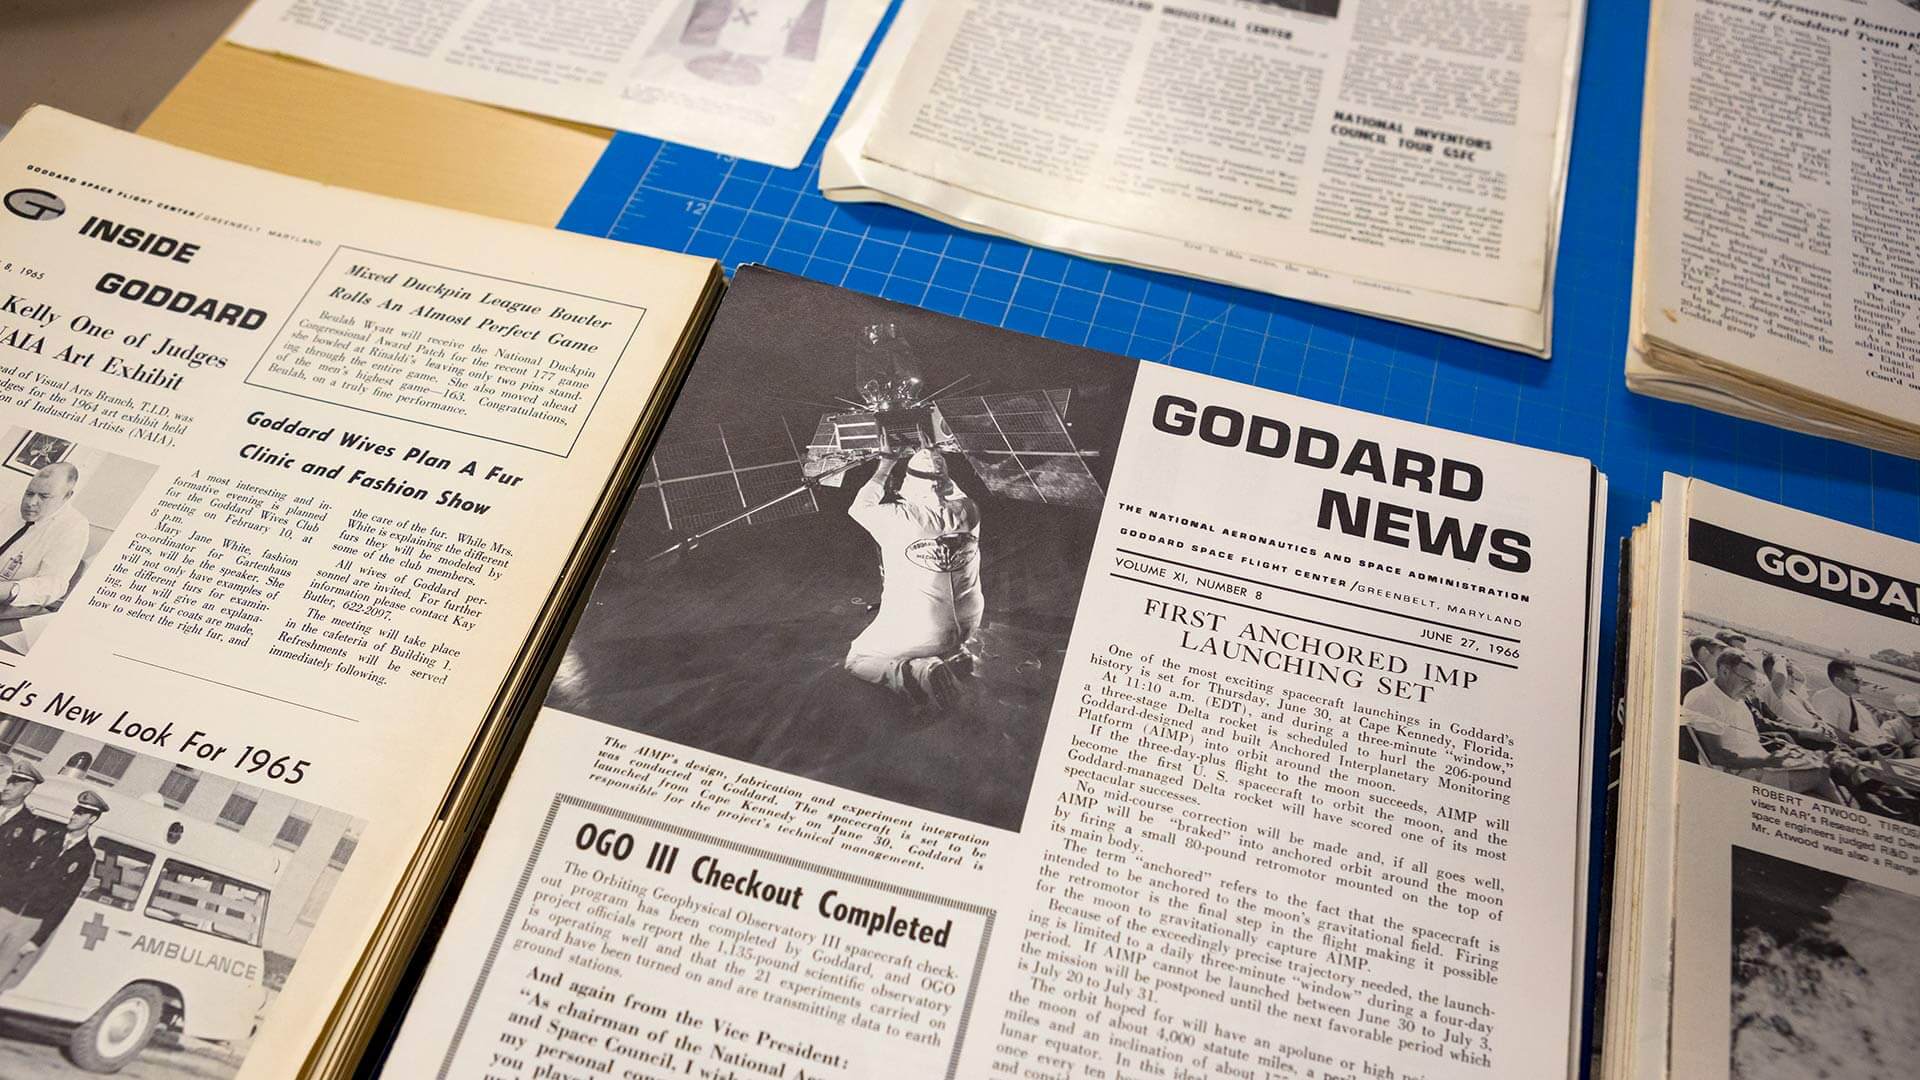 Goddard newsletters